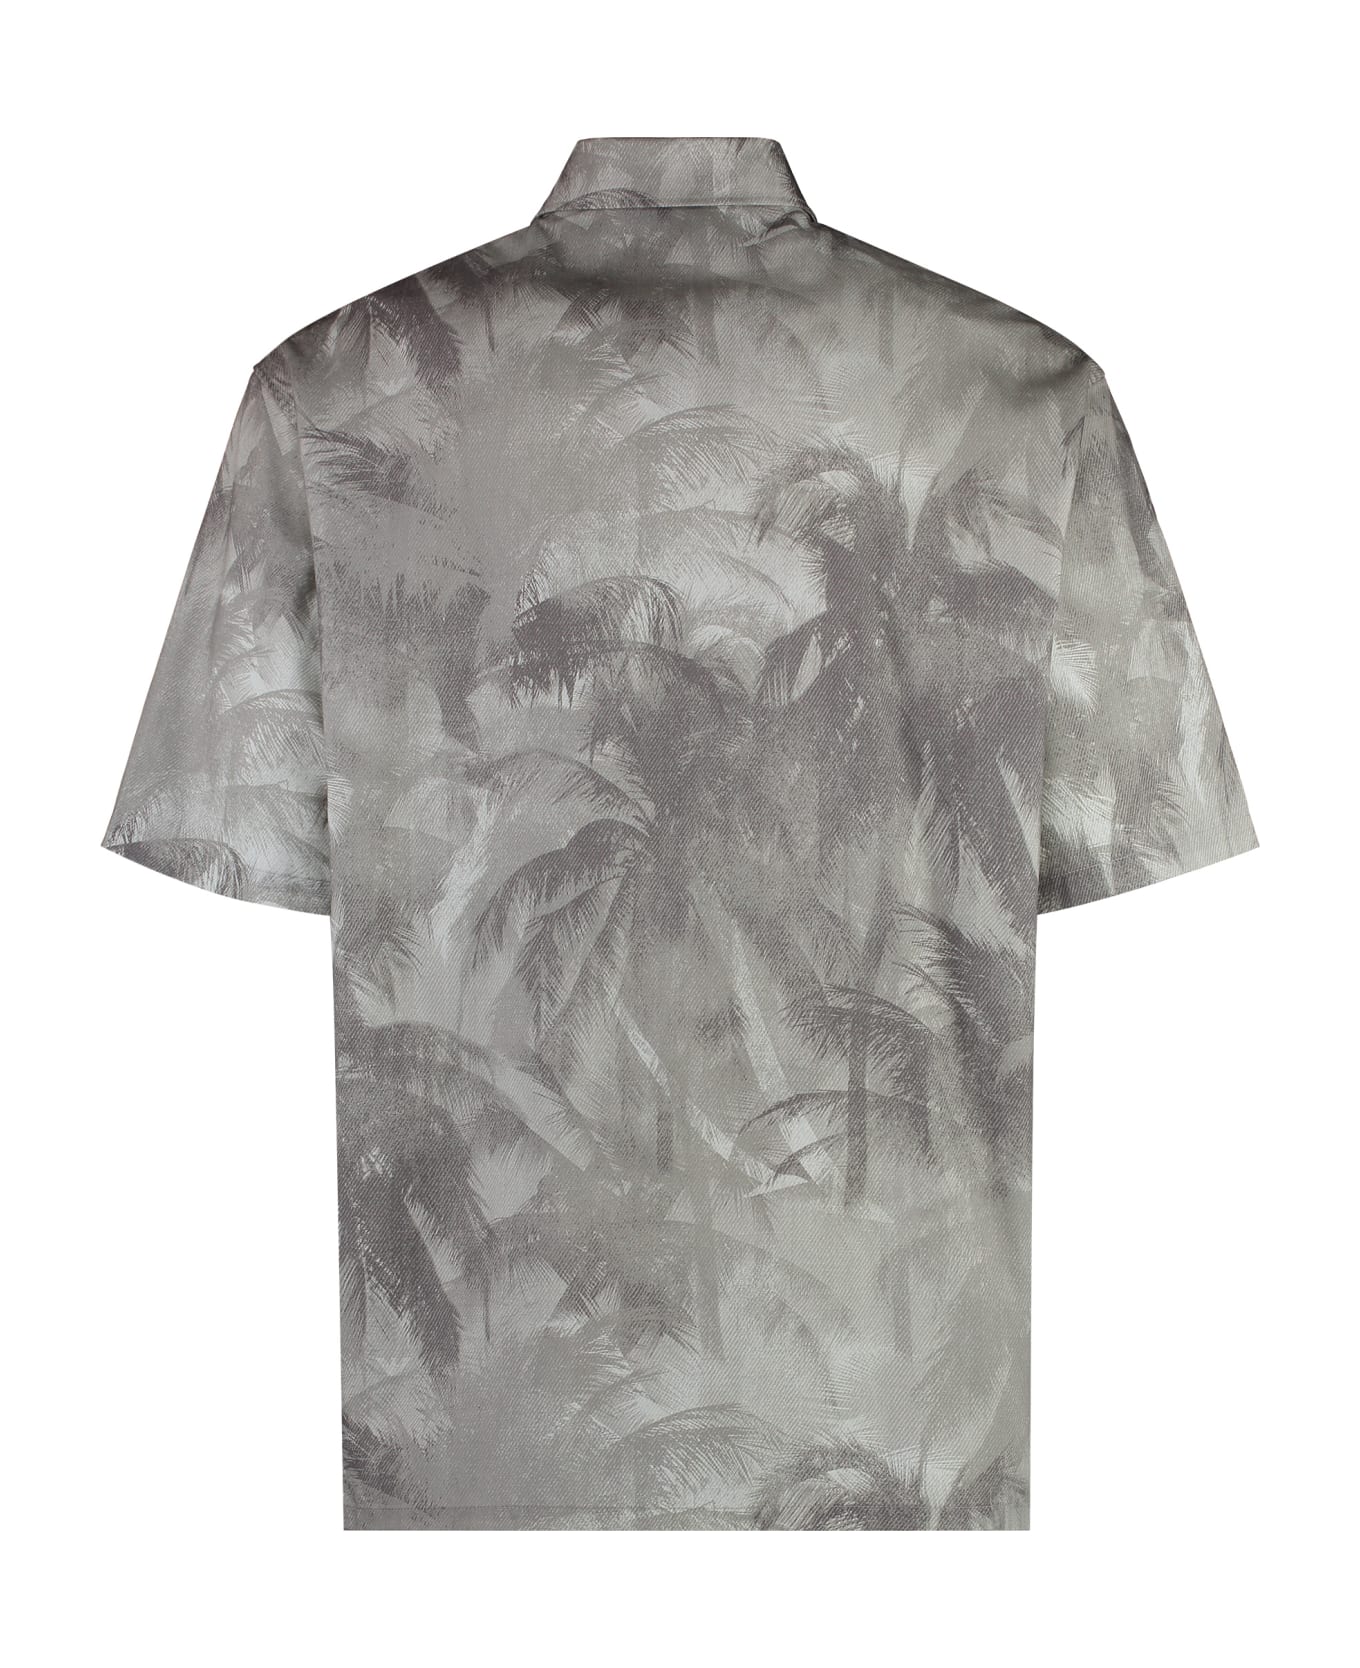 Emporio Armani Printed Short Sleeved Shirt - grey